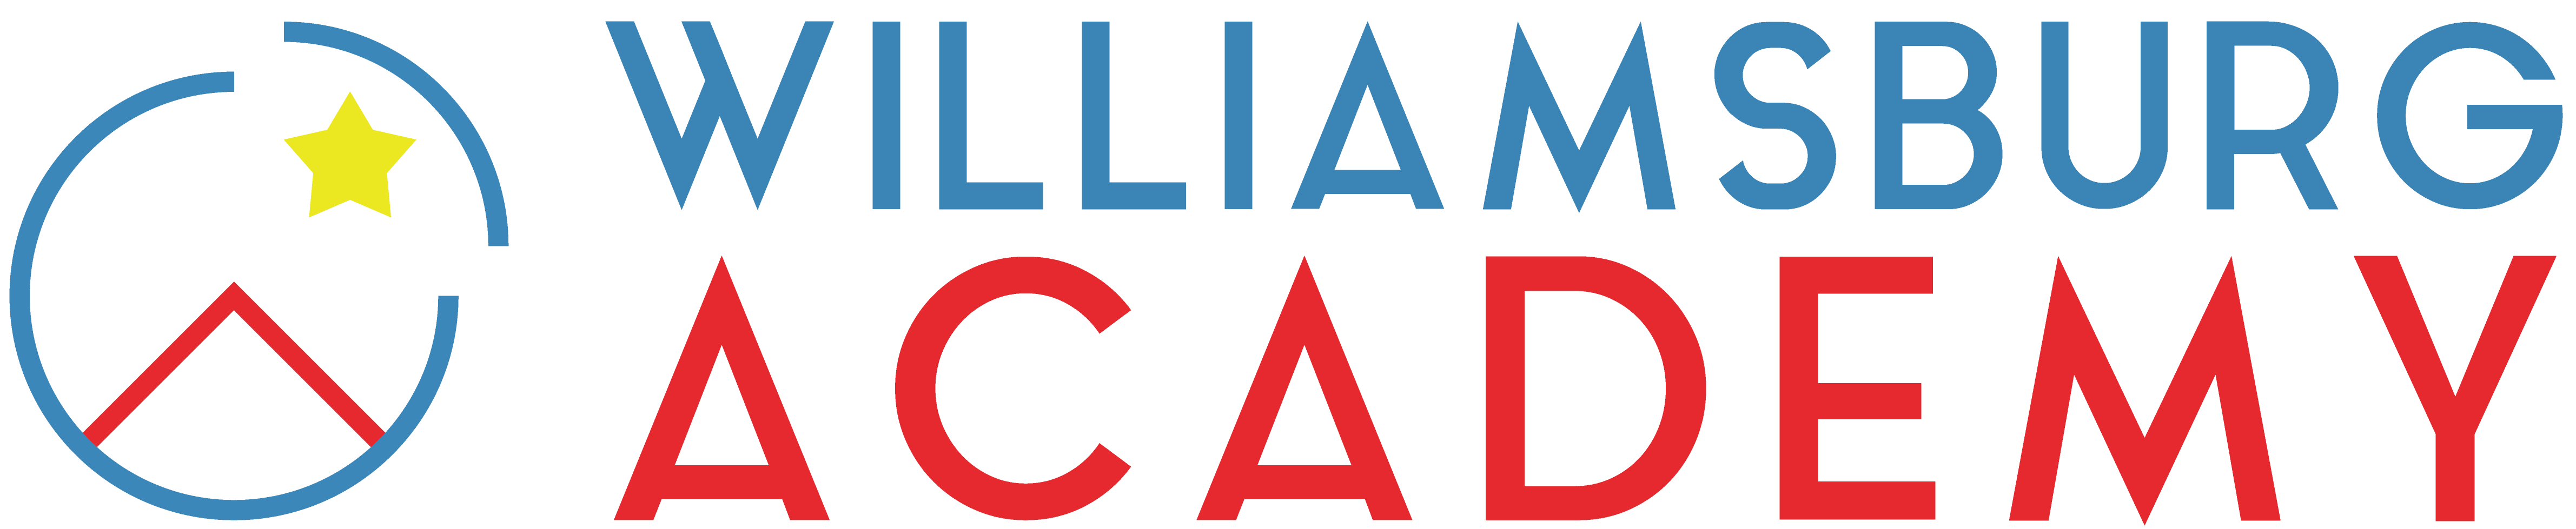 Williamsburg Academy logo